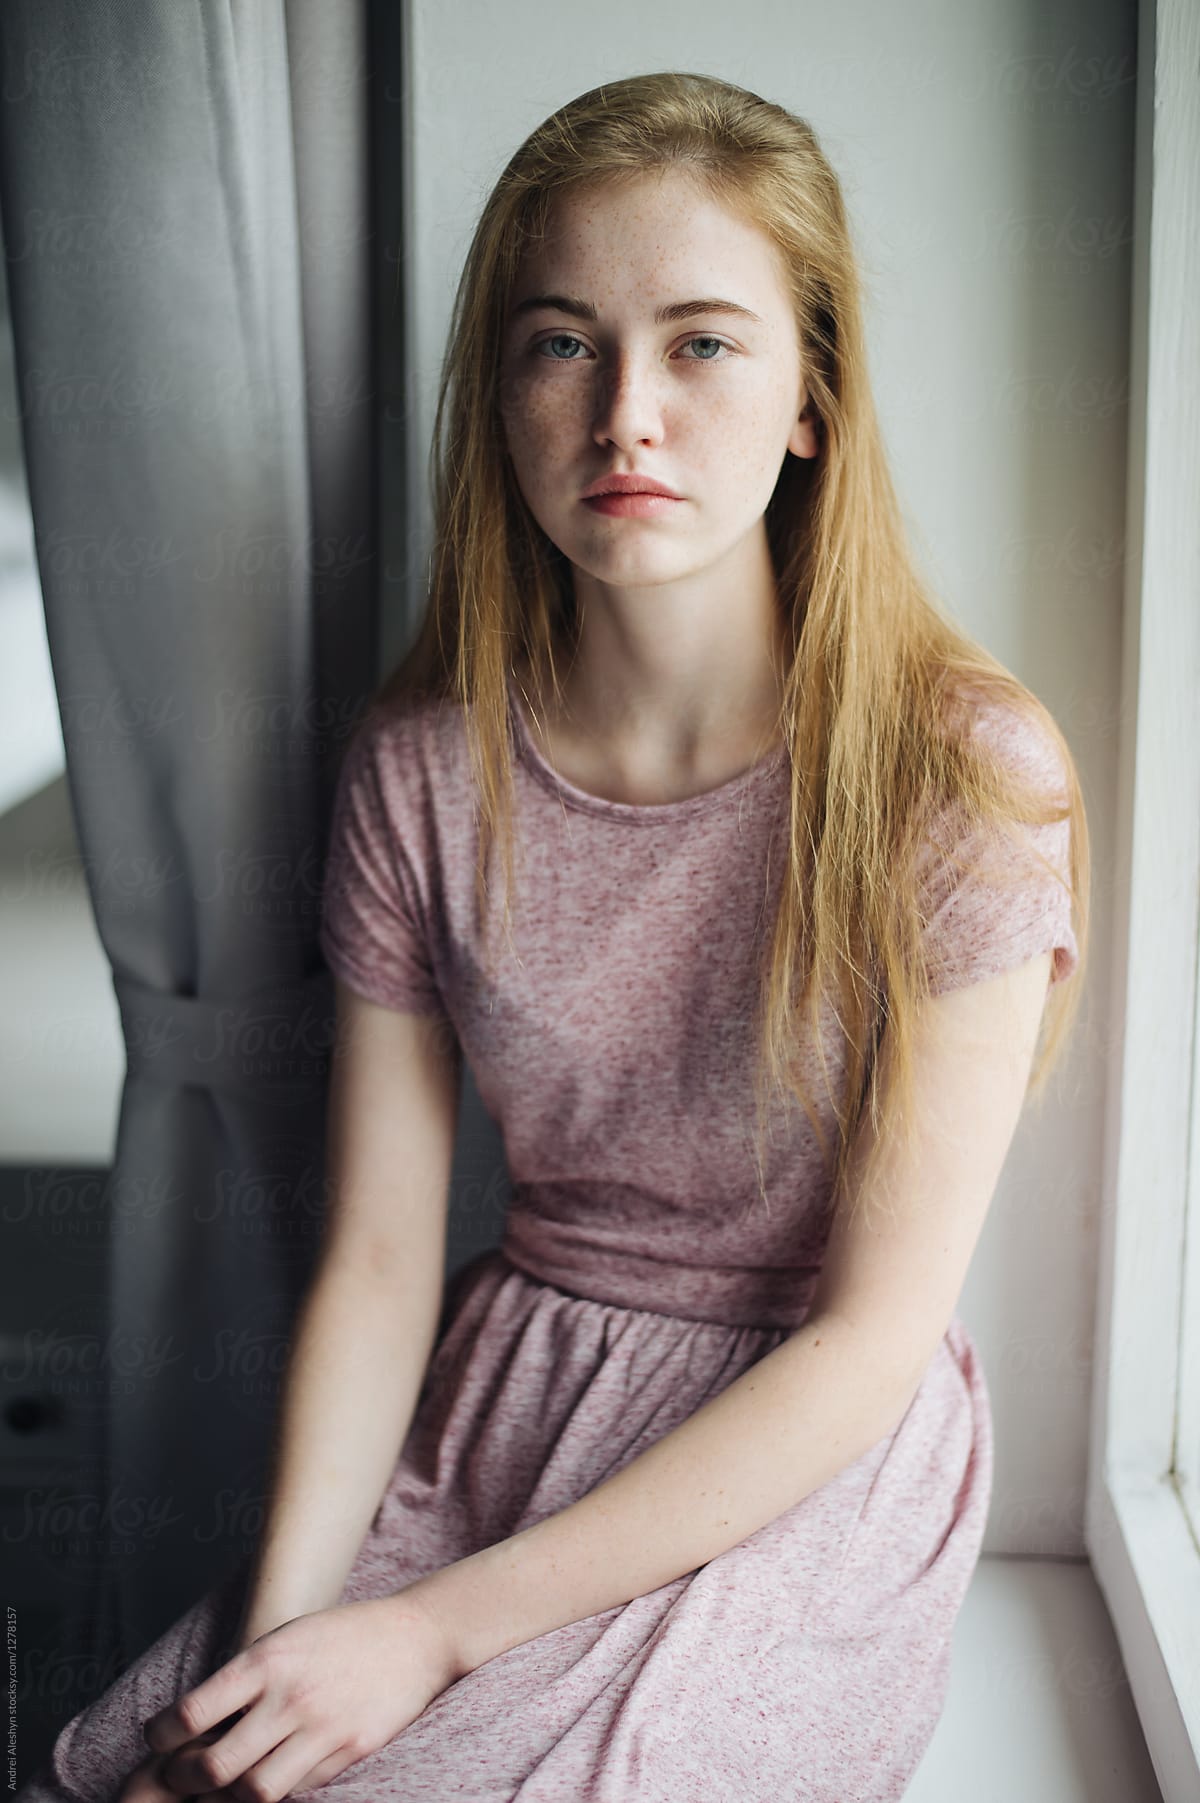 Portrait Of A Beautiful Girl With Freckles By Stocksy Contributor Andrei Aleshyn Stocksy